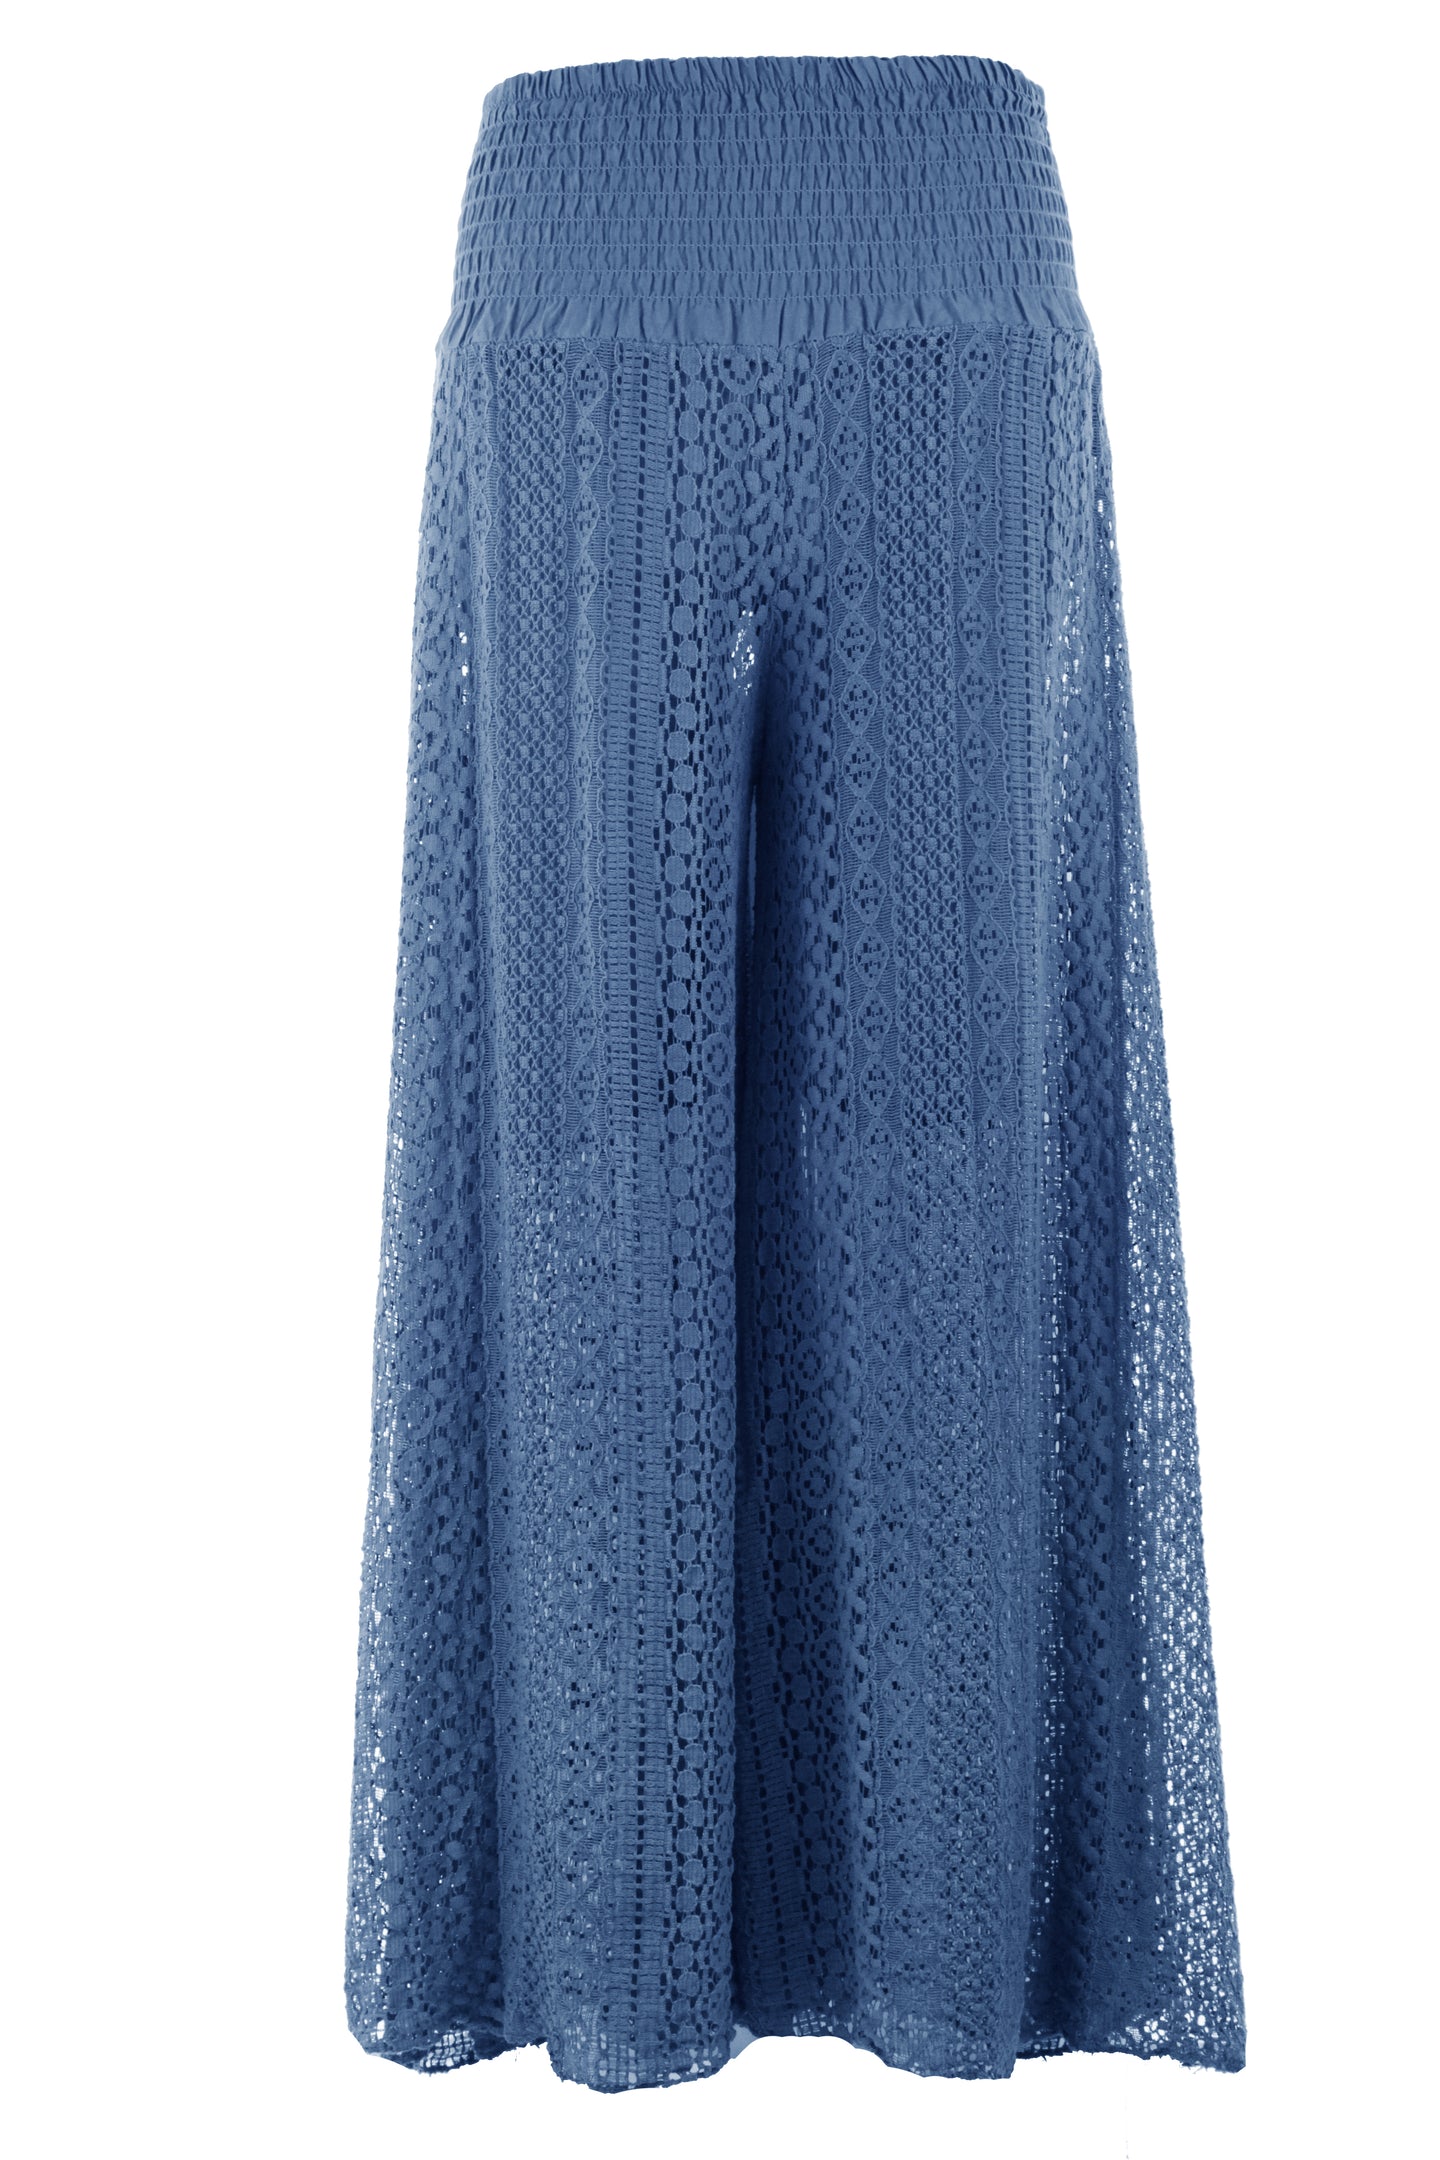 Crochet Lace Trouser